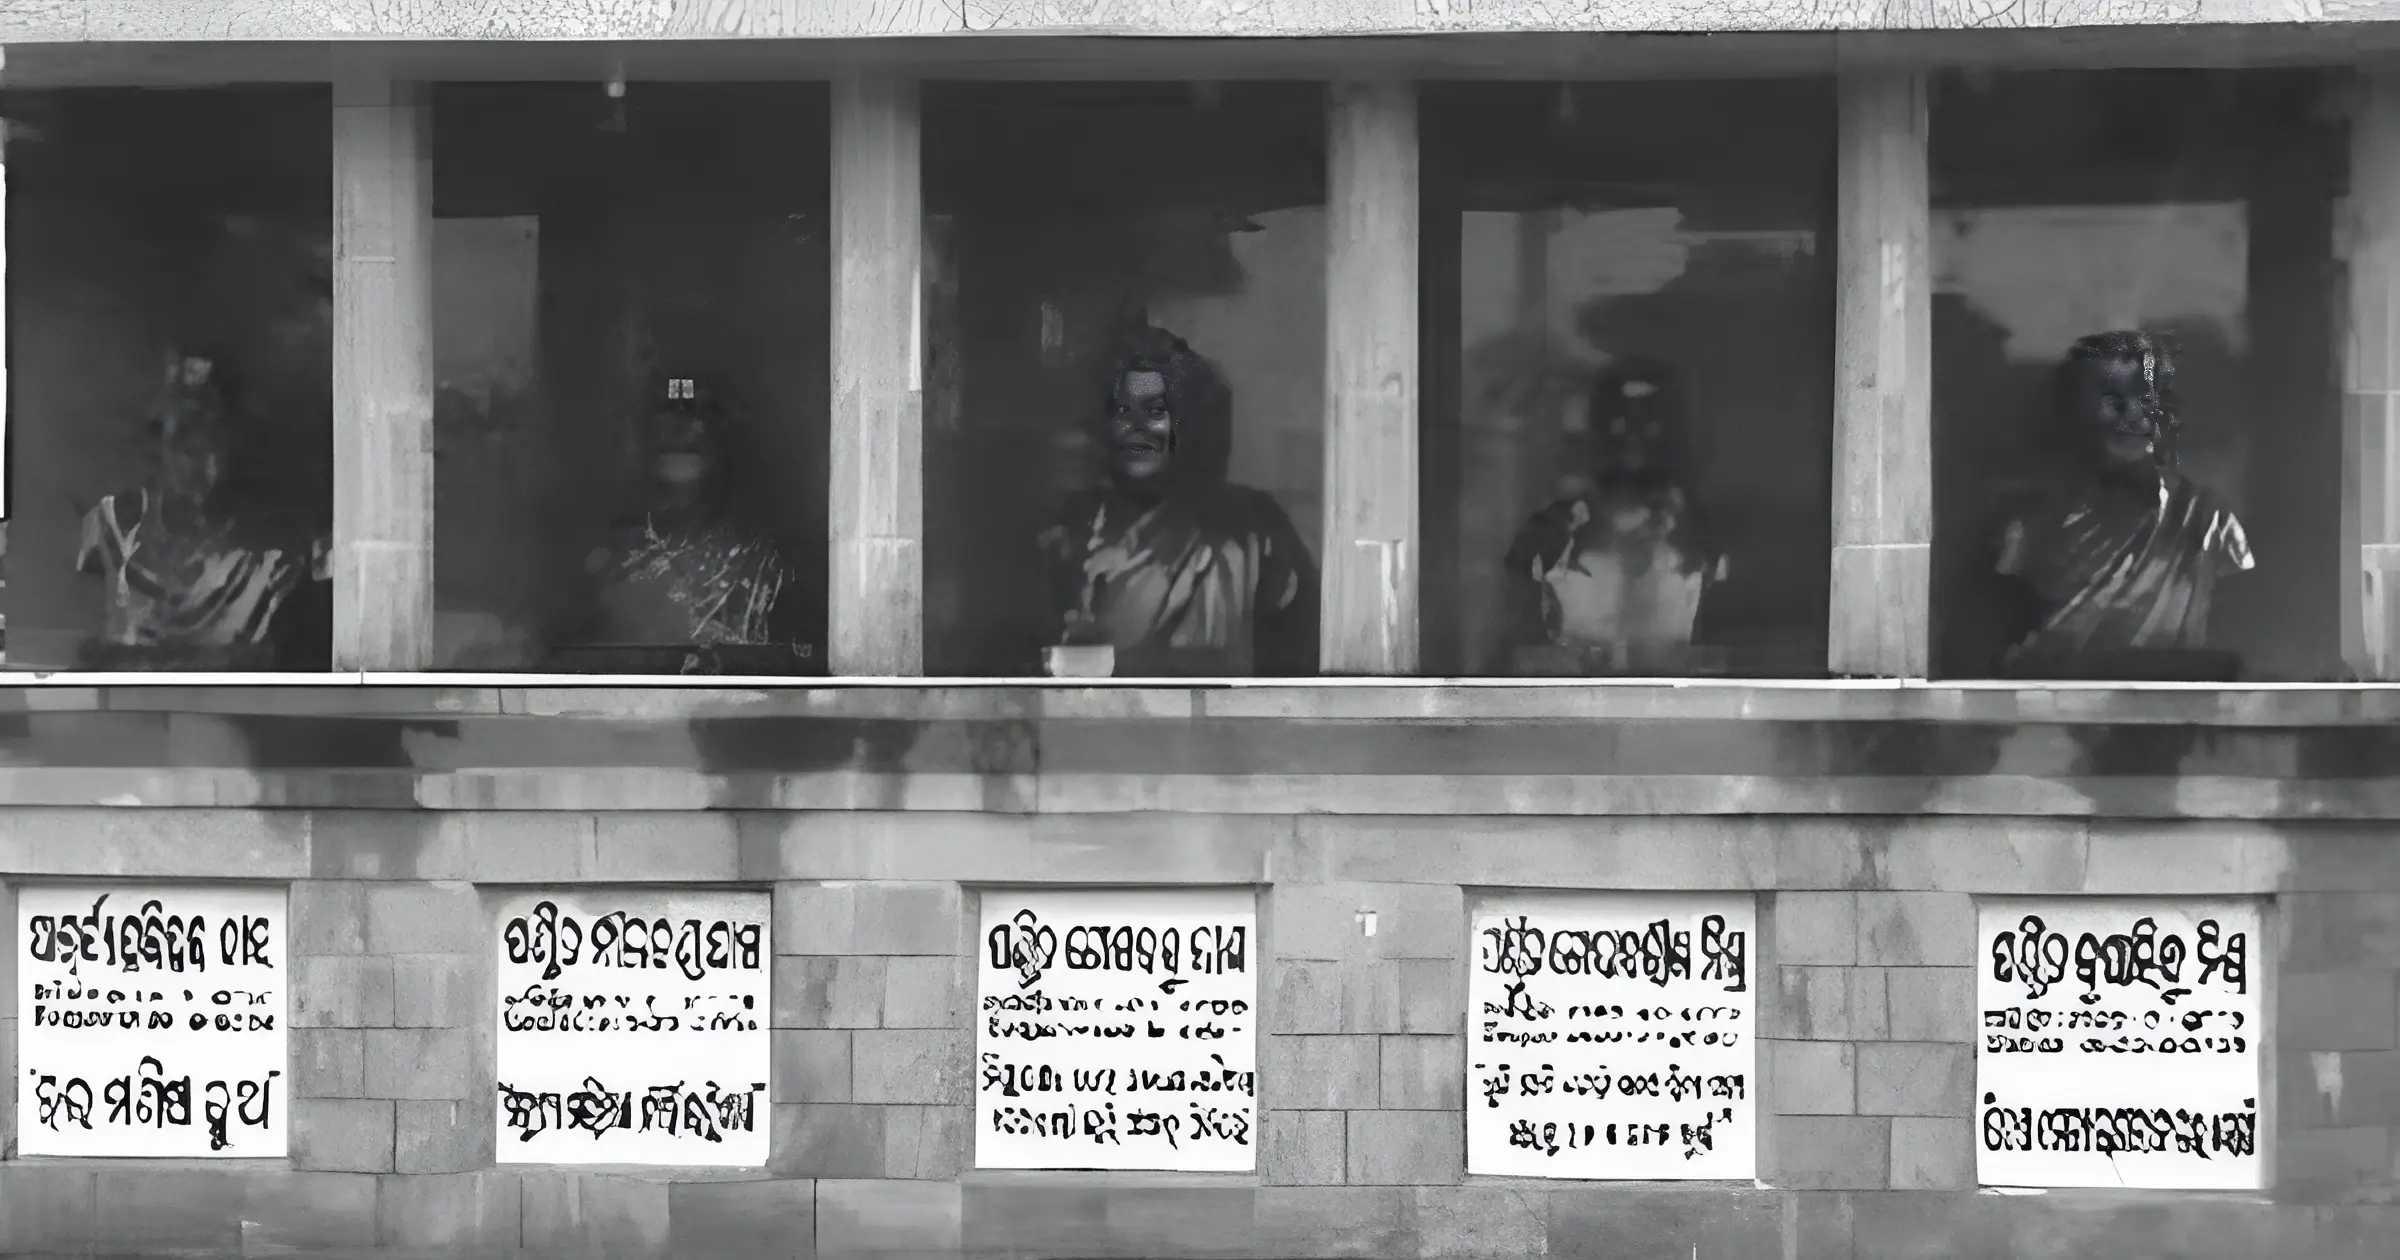 Achyutânanda Das, Ananta Das, Jasovanta Das, Jagannâtha Das, and Balarâma Das, The Panchasakha of Odisha (Chaitanya's Panchasakha)